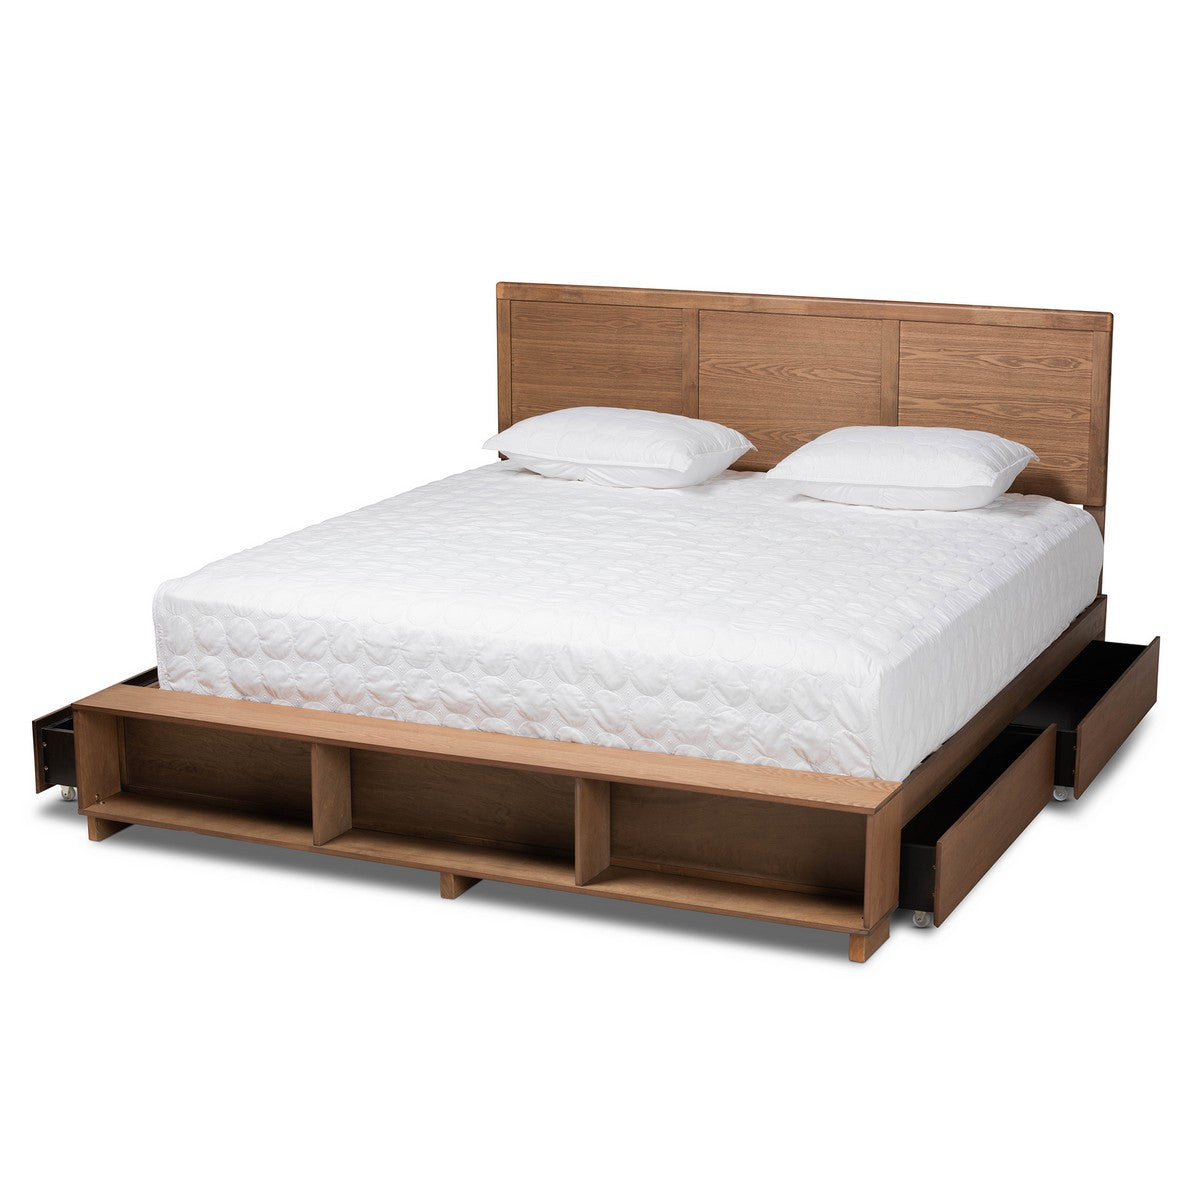 Baxton Studio Tamsin Modern Transitional Ash Walnut Brown Finished Wood King Size 4-Drawer Platform Storage Bed with Built-In Shelves